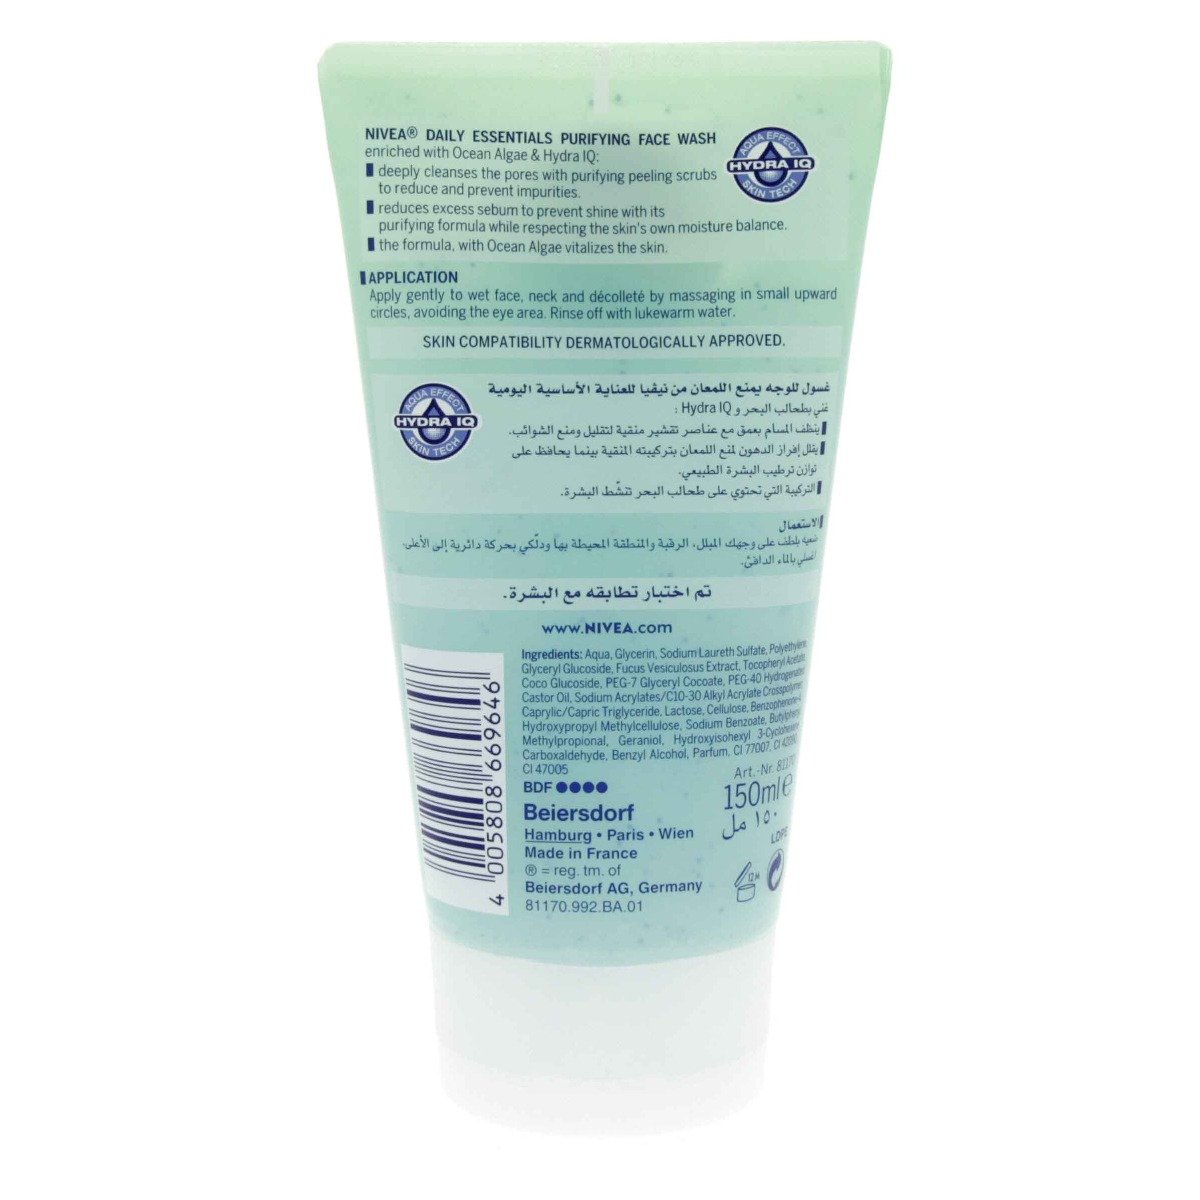 Nivea Purifying Wash Gel Combination To Oily Skin - 150ml - Bloom Pharmacy